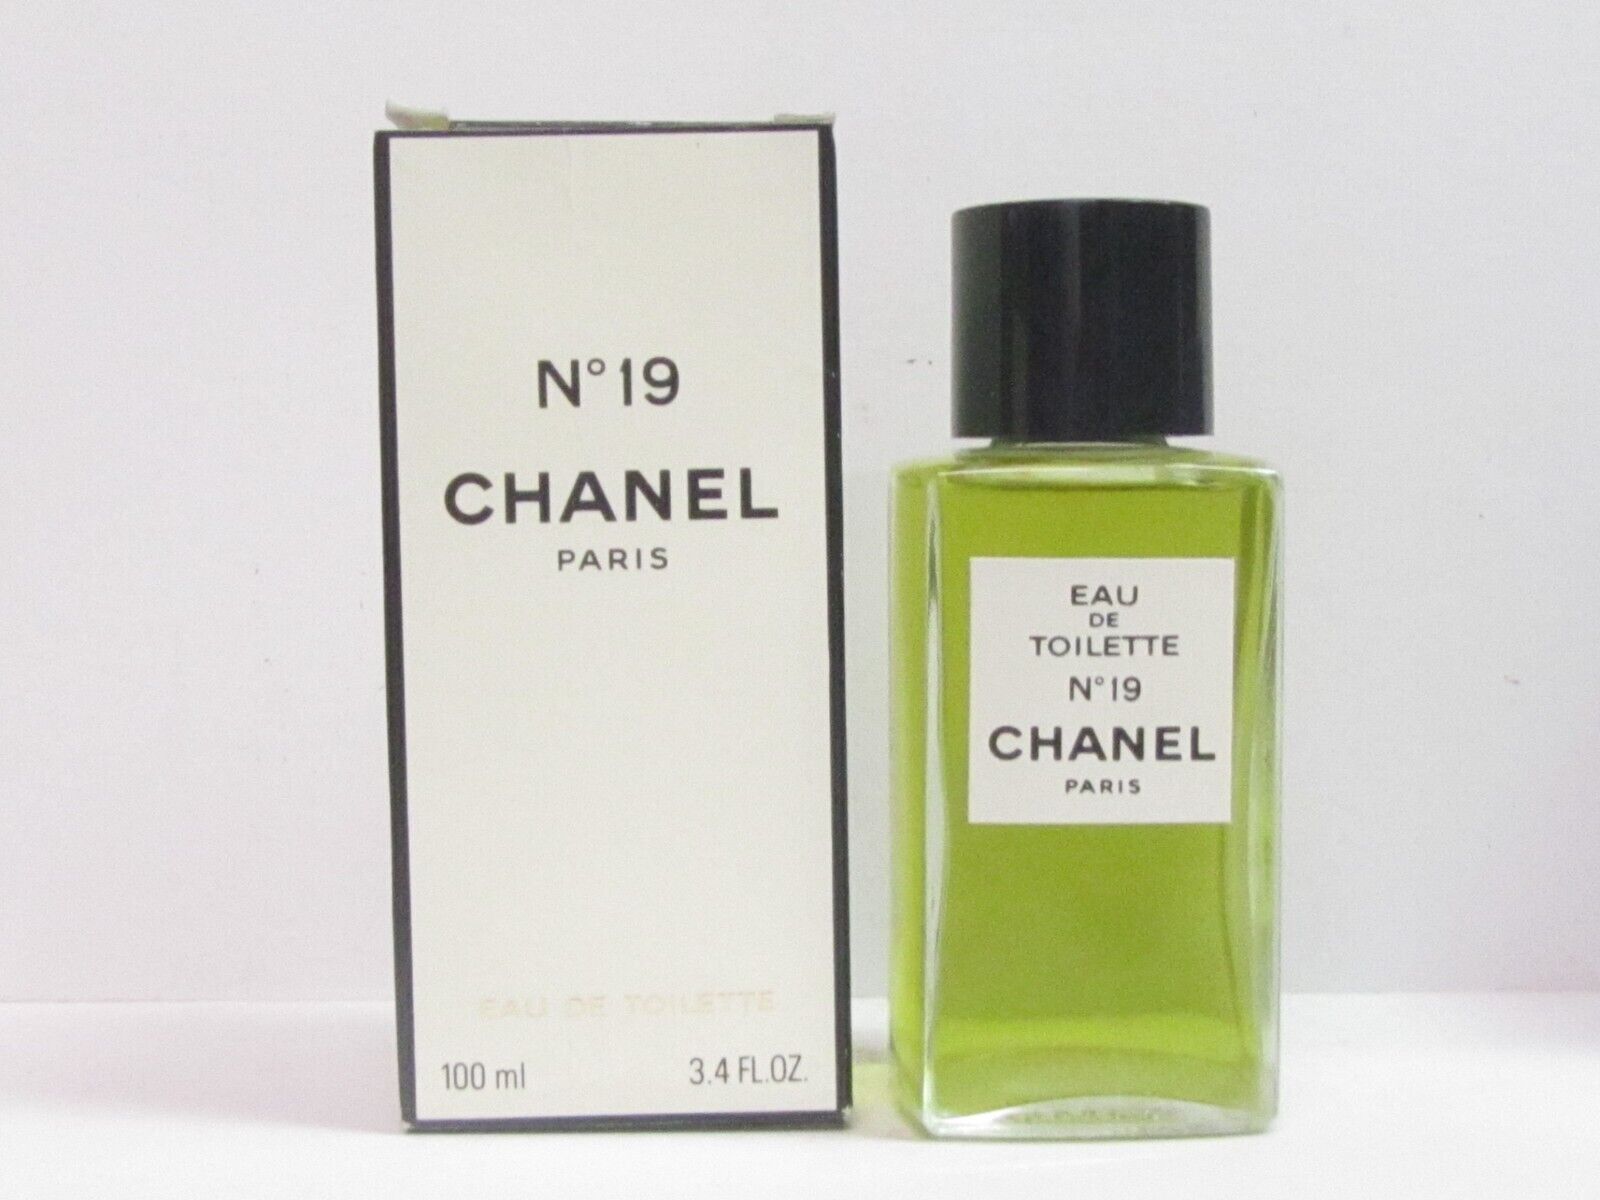 Chanel No 19 pure parfum 7 ml. Rare, vintage original 1970 edition. Sealed